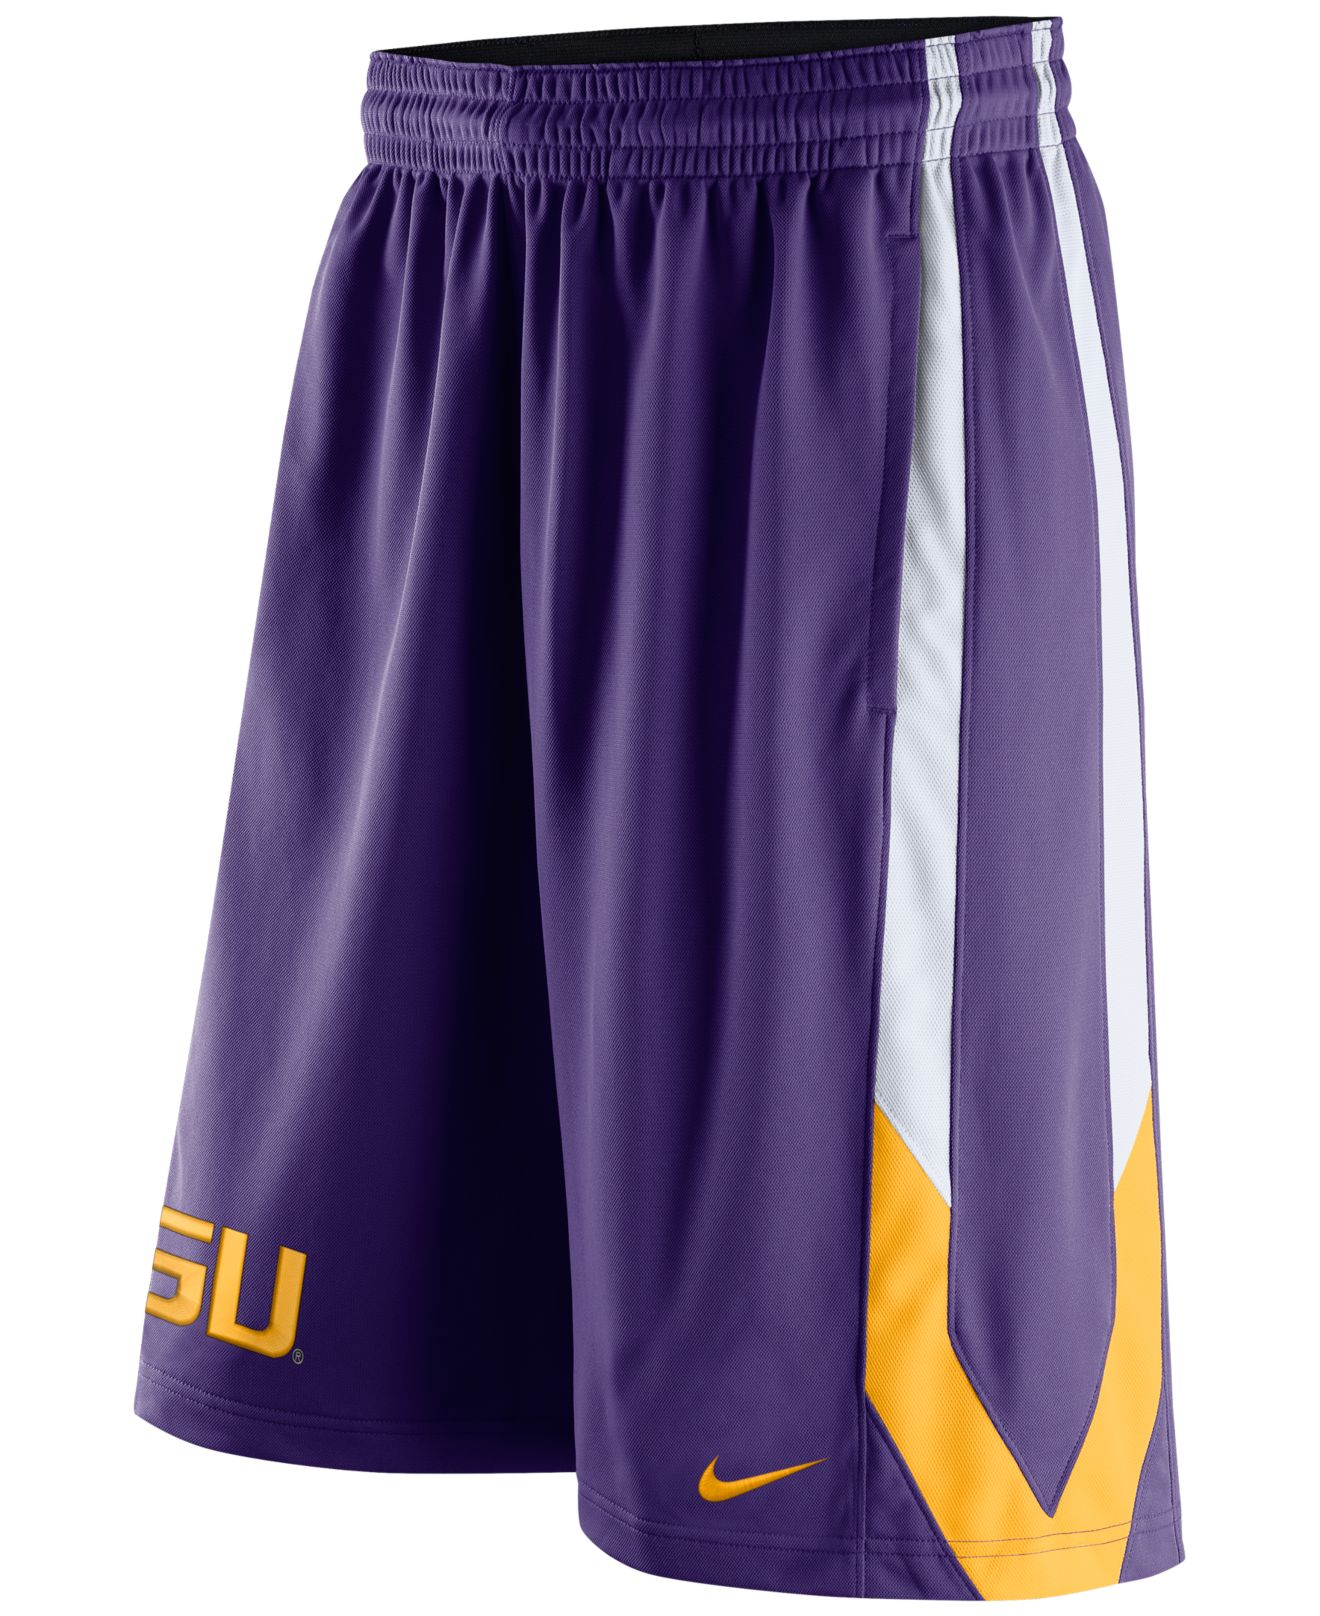 LSU Basketball on X: Short shorts, don't care 😈